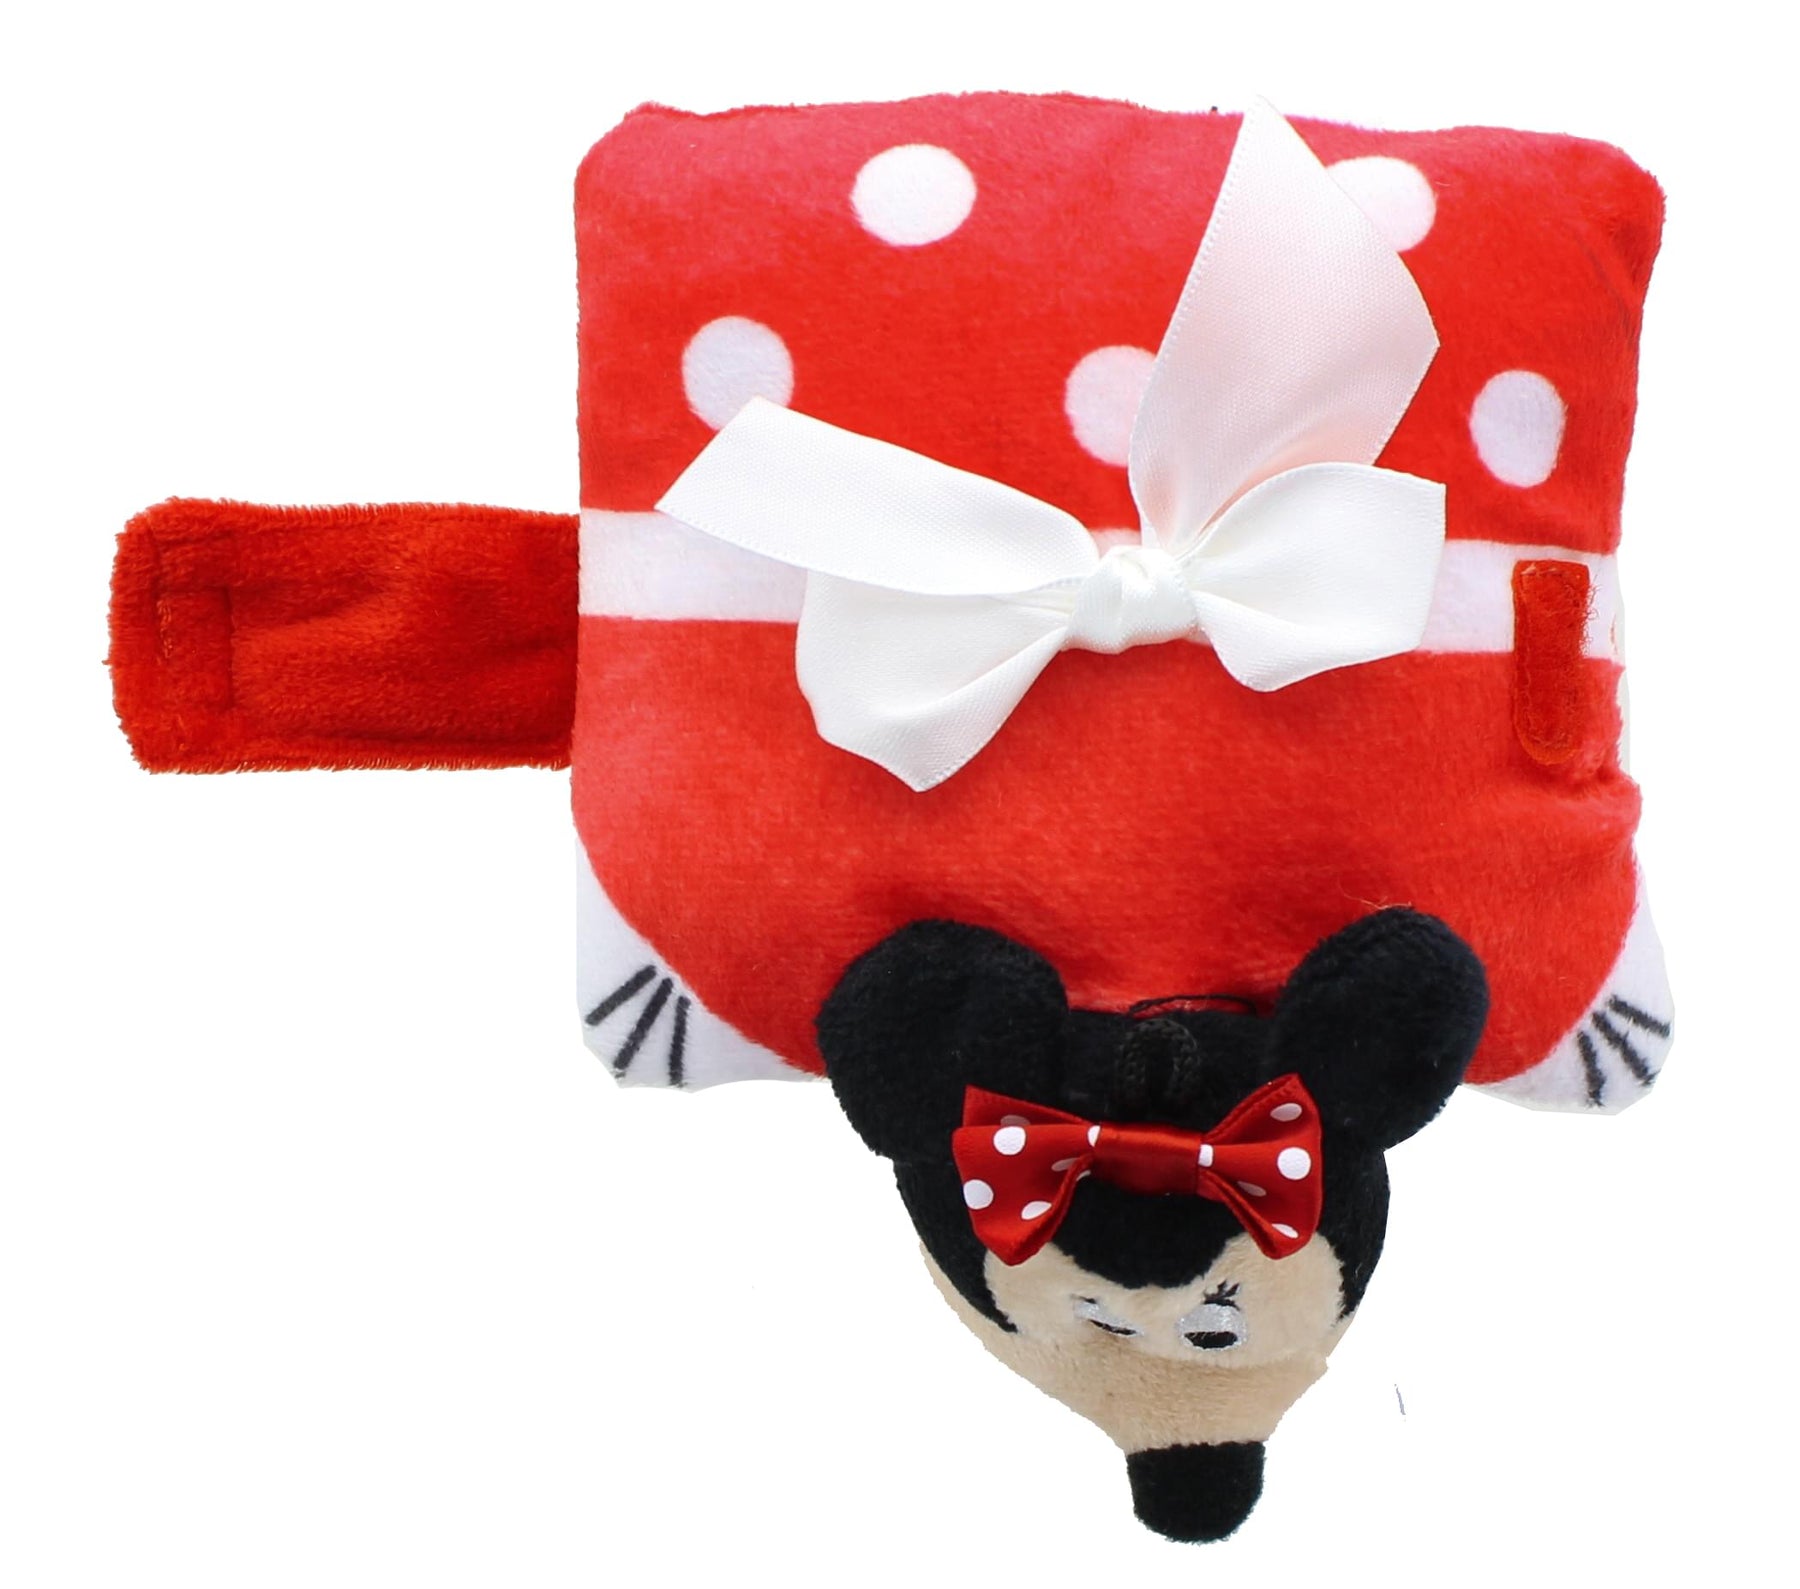 Disney Red Minnie Mouse 5 Inch Mini Pillow Pet Plush